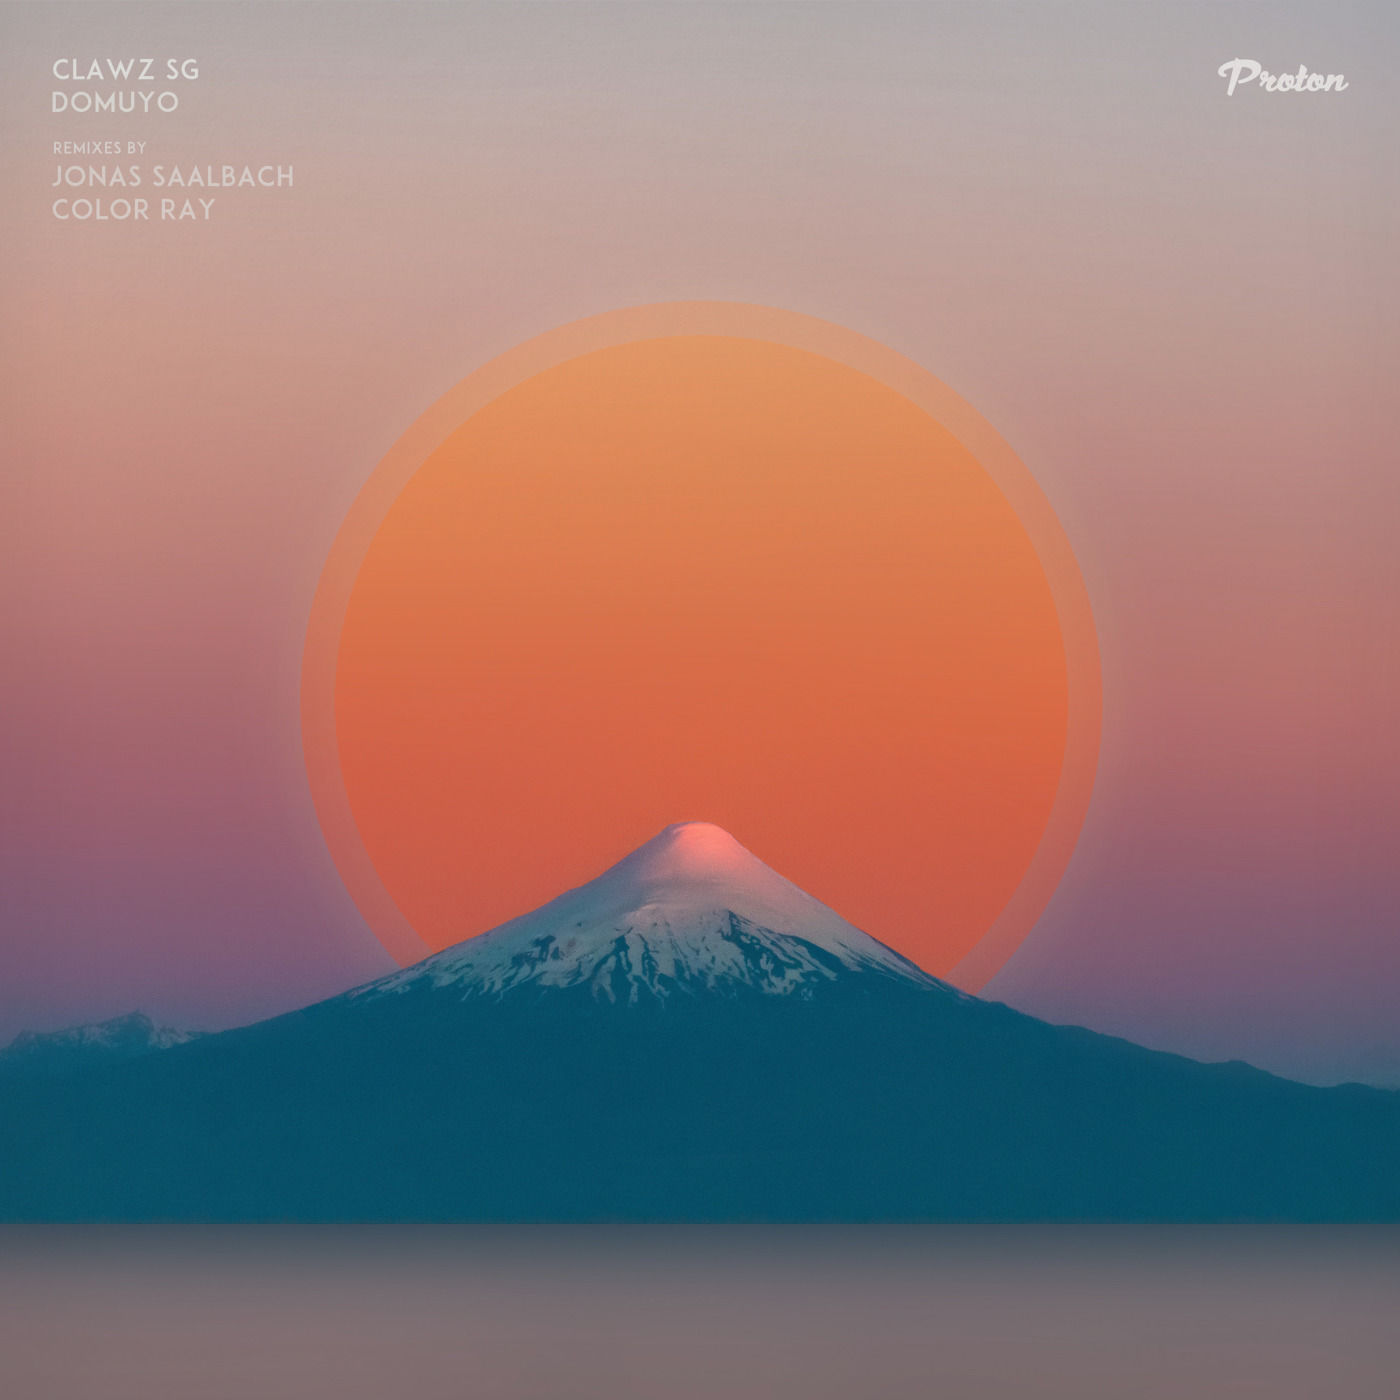 Clawz Sg - Domuyo (color Ray Remix) on Revolution Radio